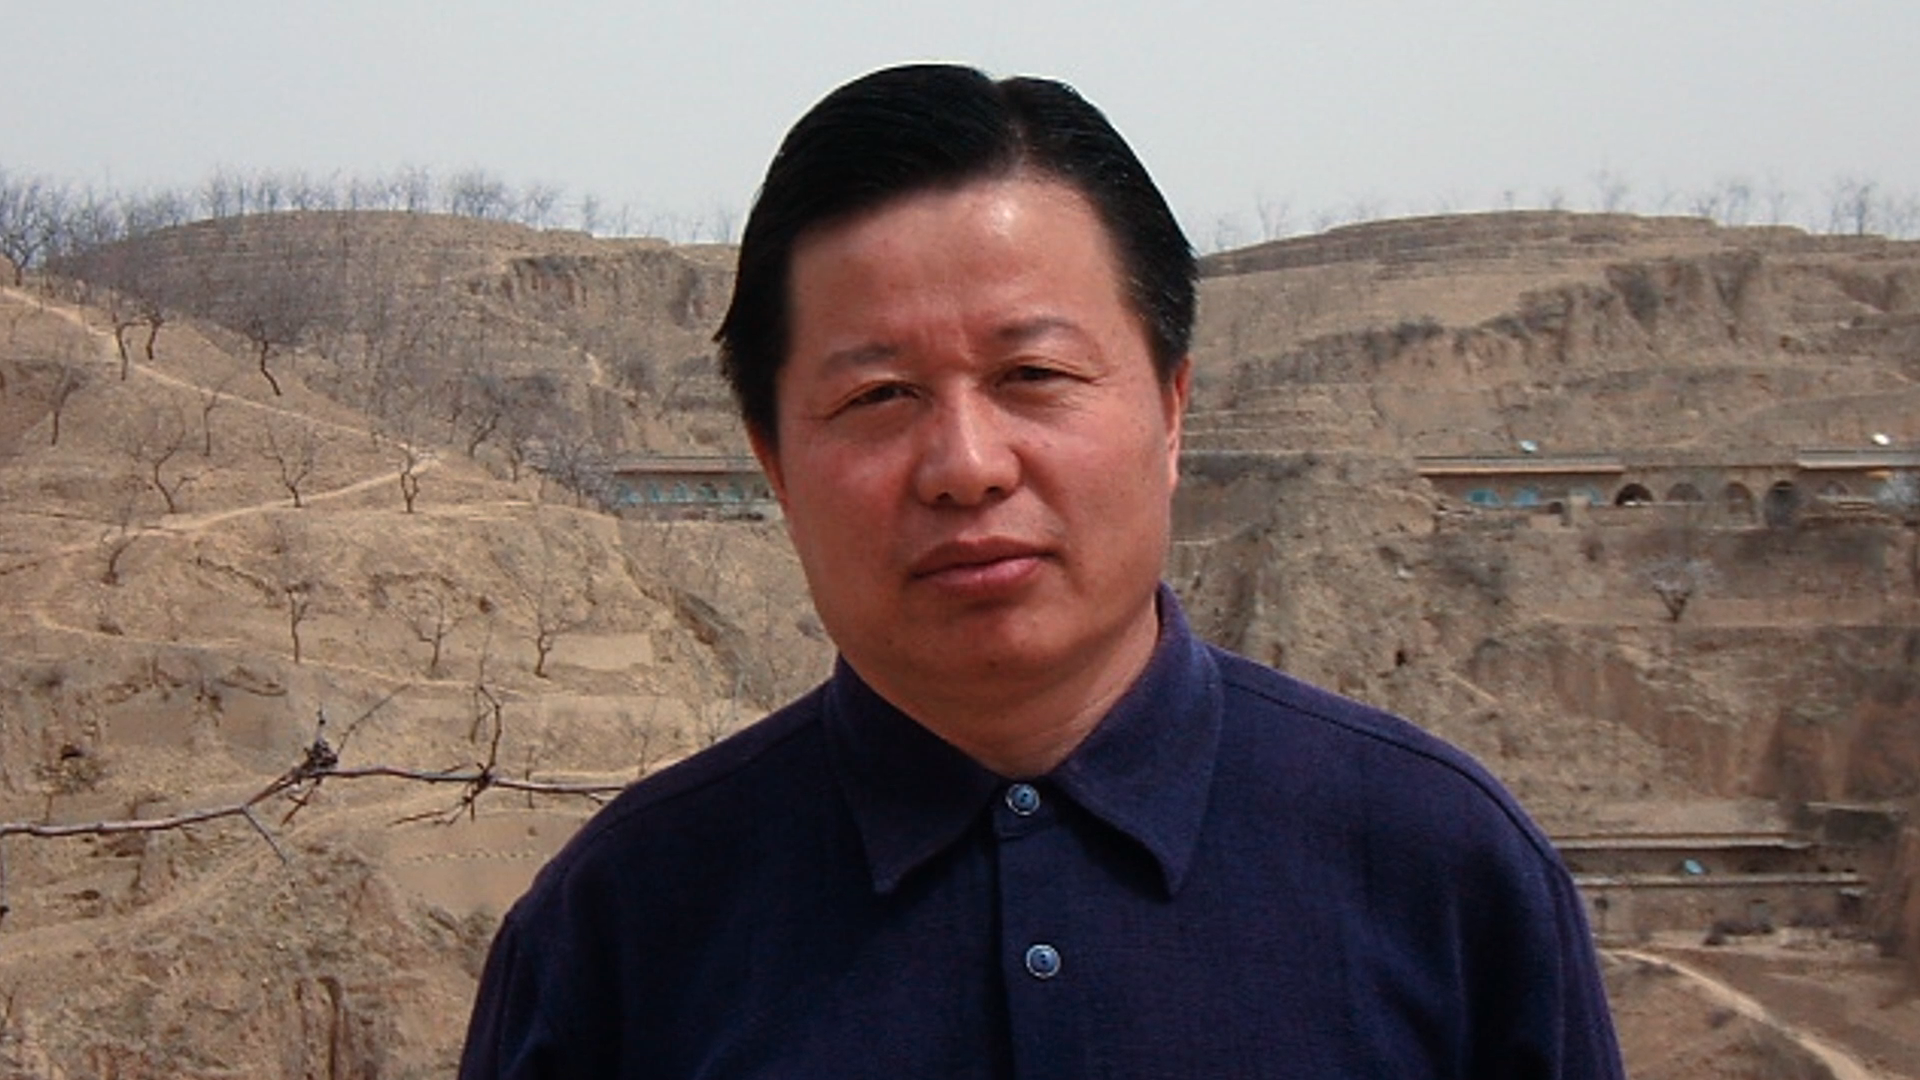 Gao Zhisheng in the 2012 documentary, "Transcending Fear: The Story of Gao Zhisheng."